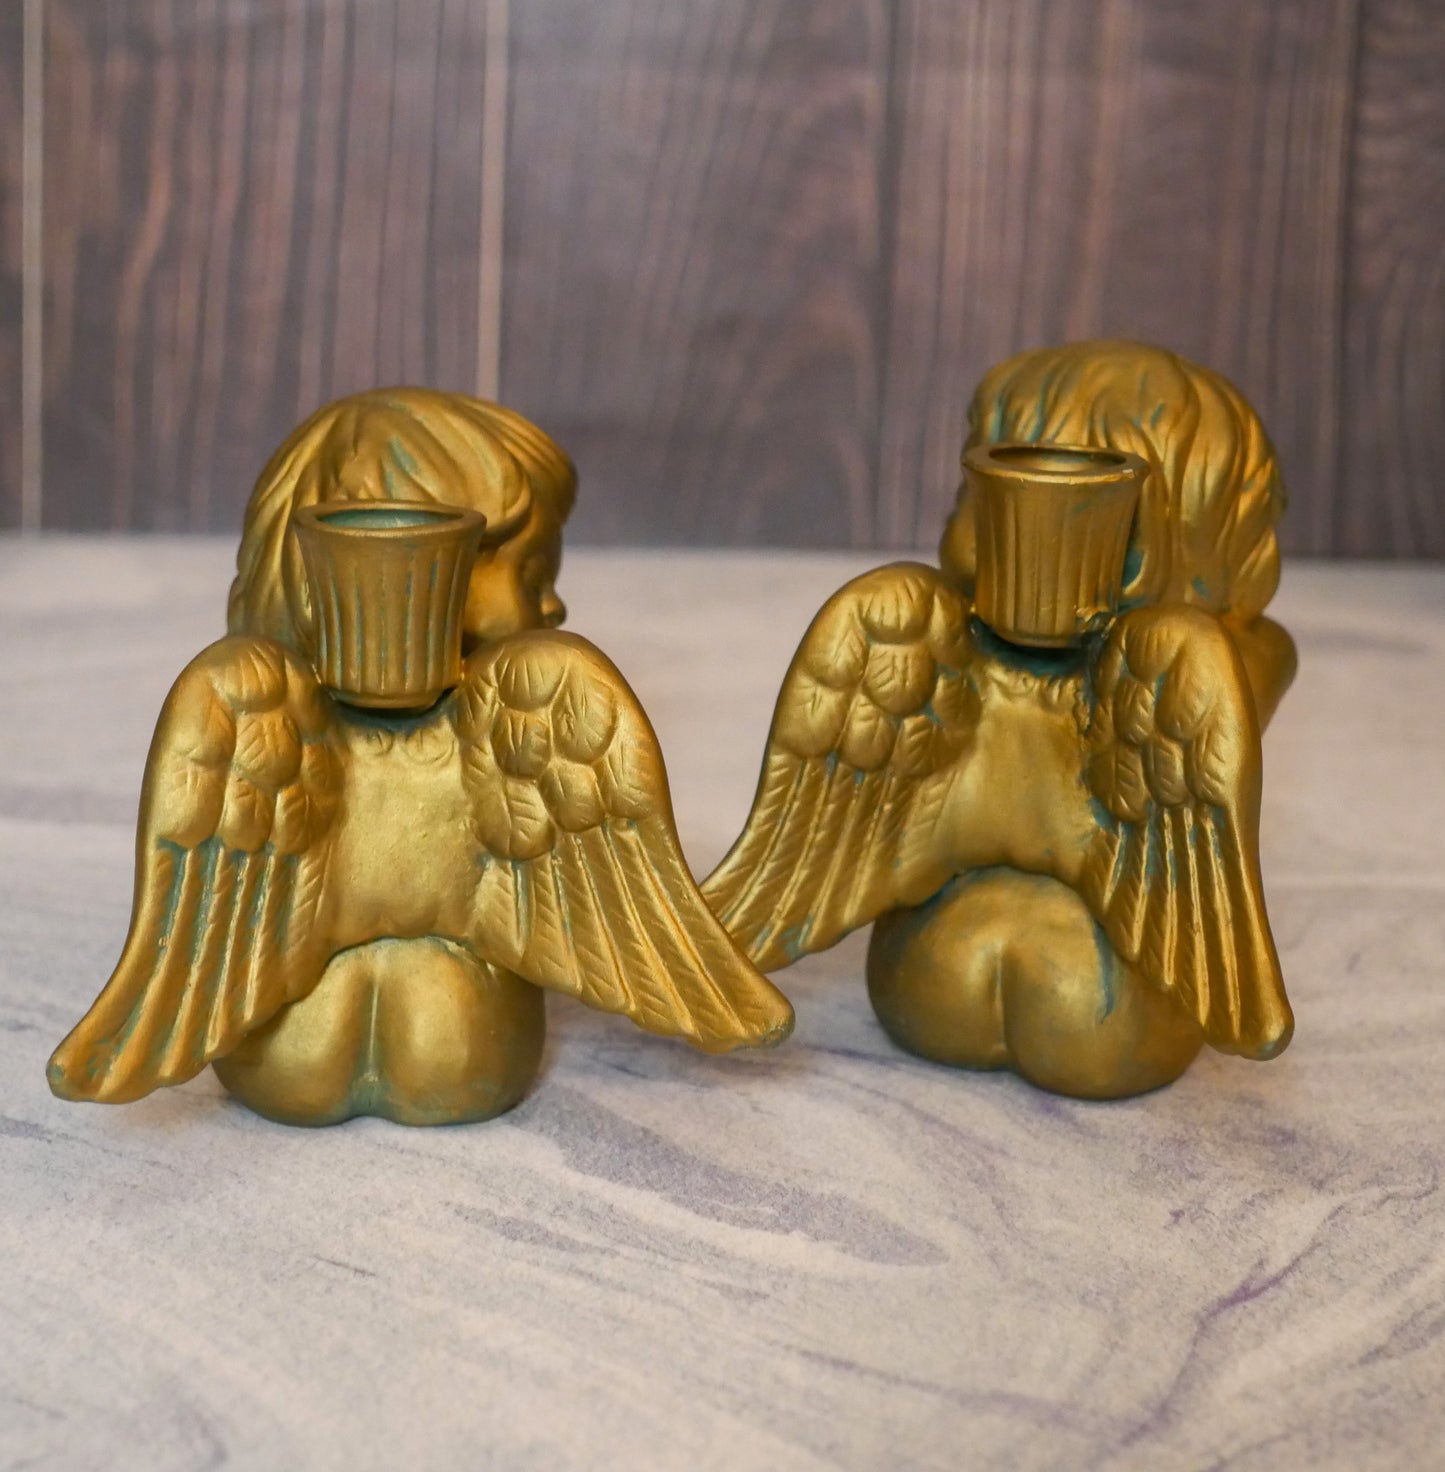 Pair of Ceramic Gold Cherub Candlestick Holder | Cherub Home Decoration Gift 5.25"